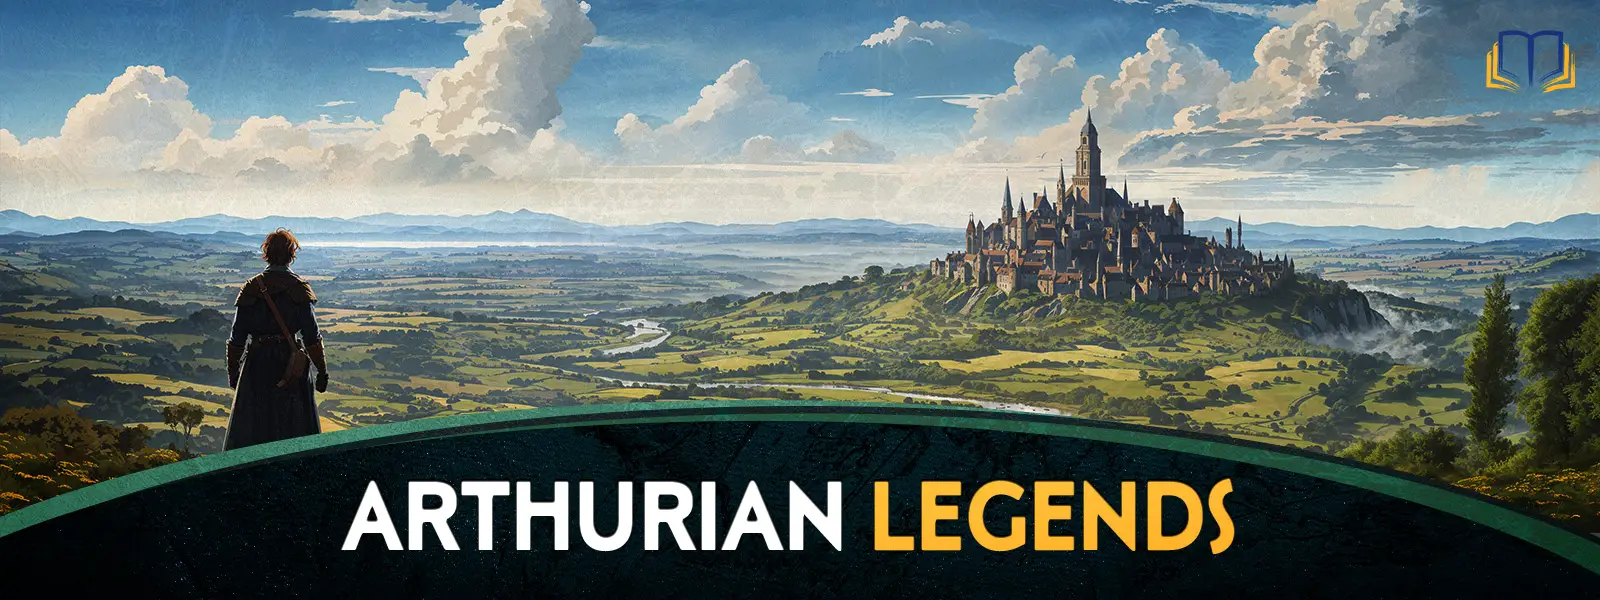 Arthurian Legends Hub Landscape